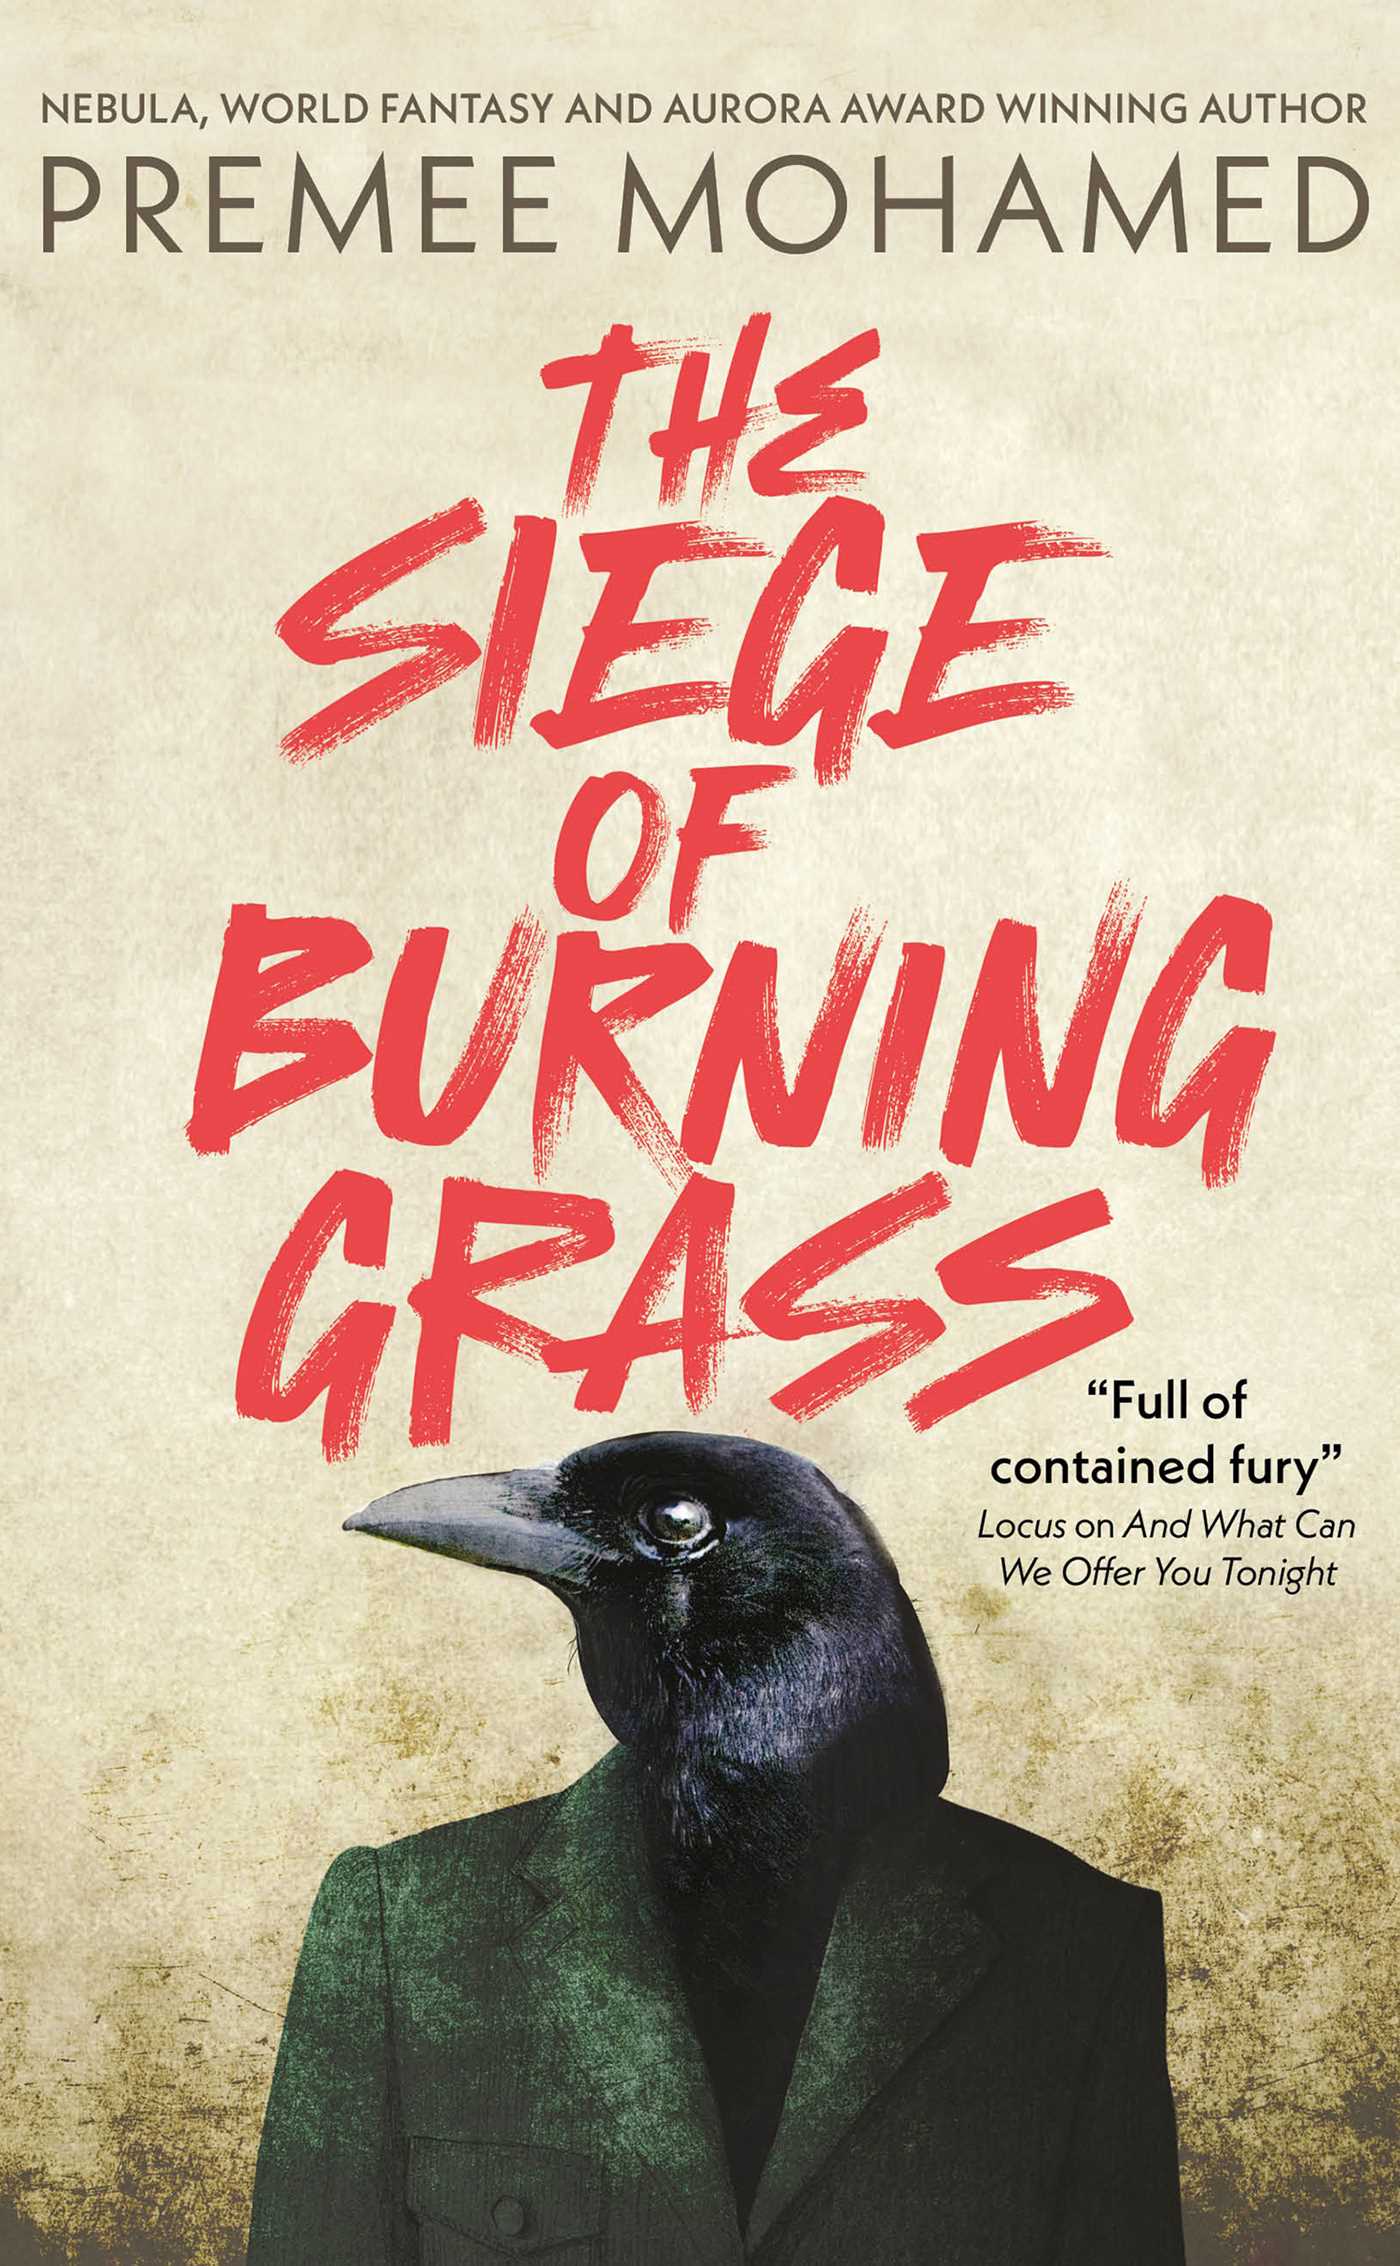 Premee Mohamed: The Siege of Burning Grass (Hardcover, Solaris)